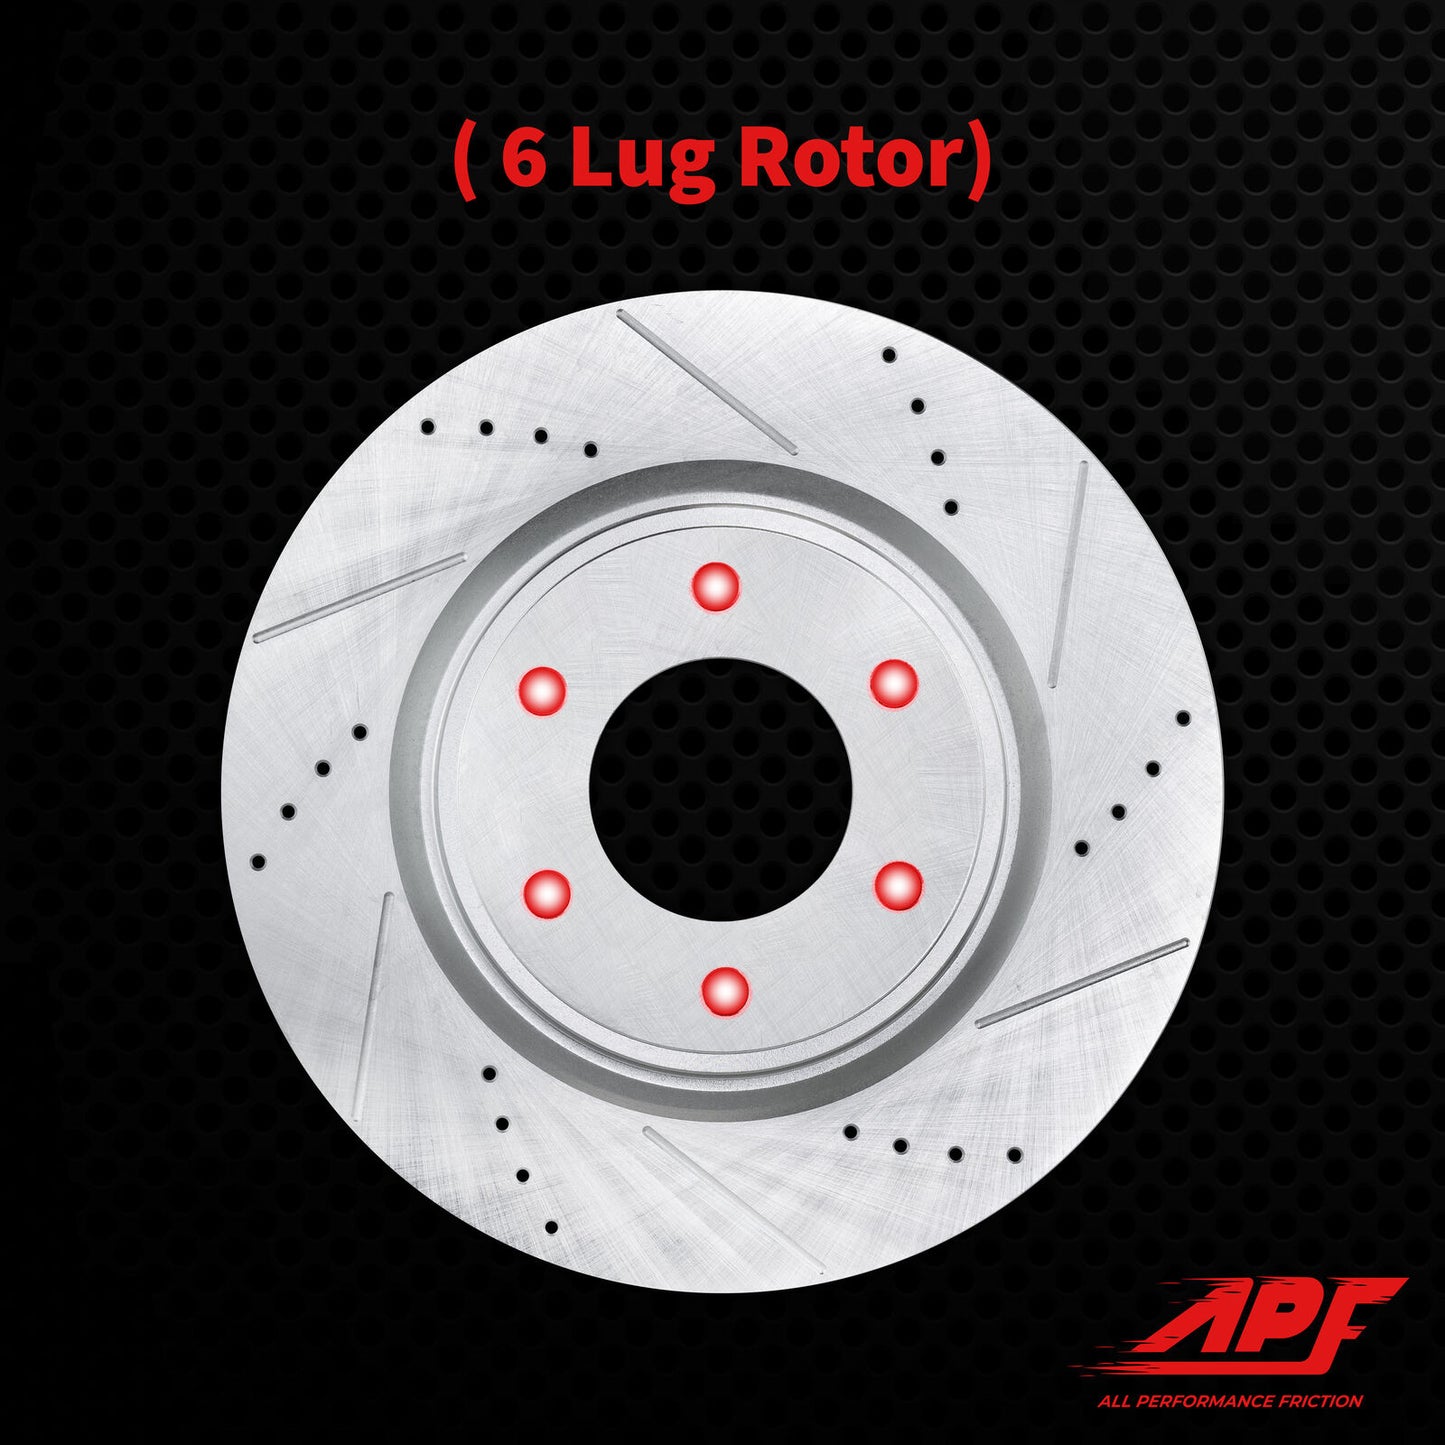 APF Rear Brake Kit compatible with INFINITI QX80 2014-2019 | Zinc